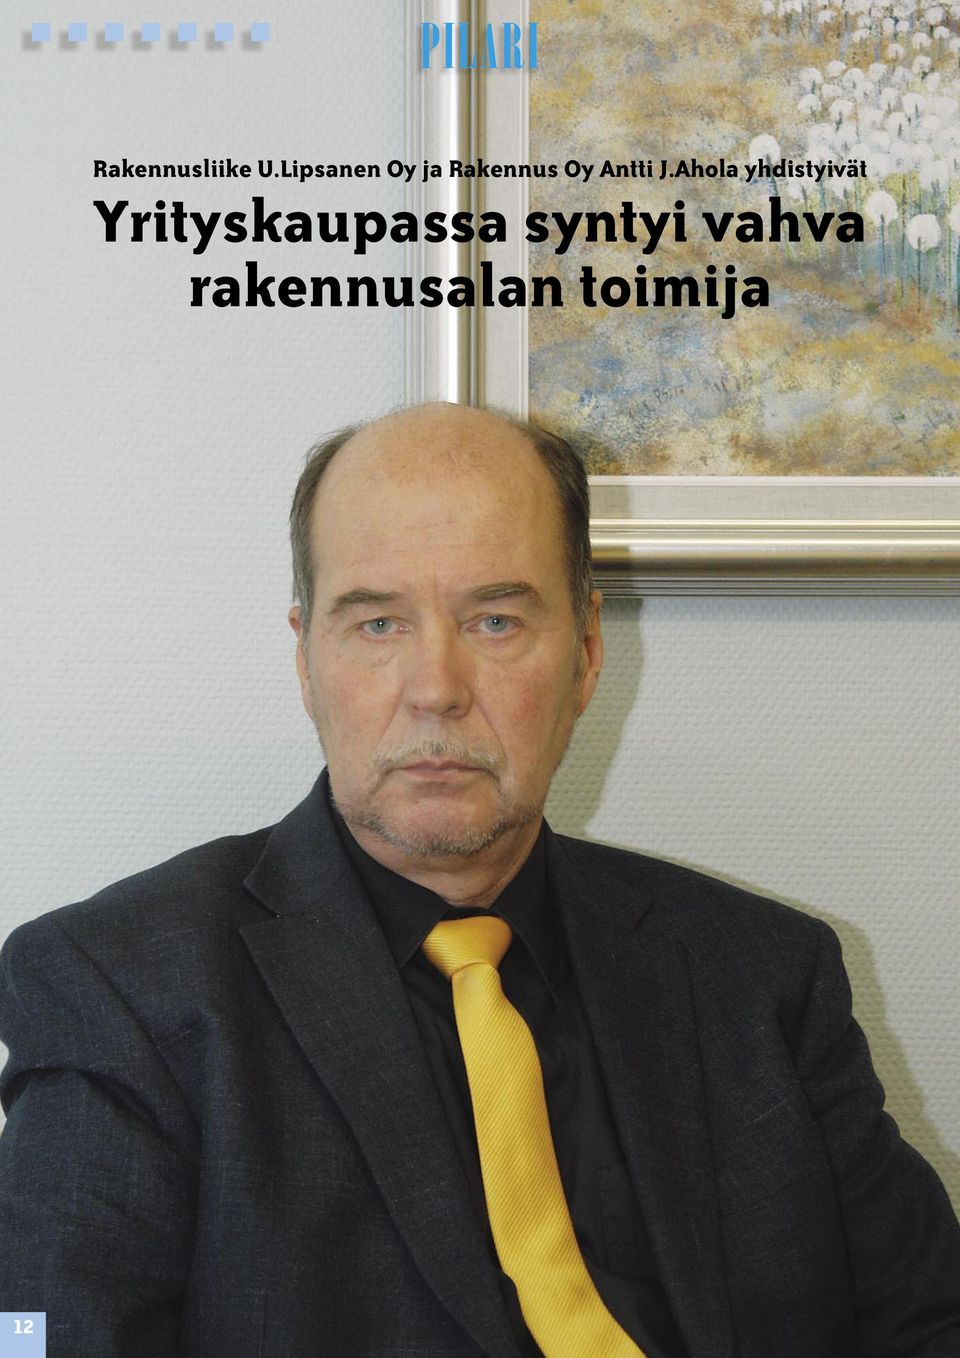 Antti J.